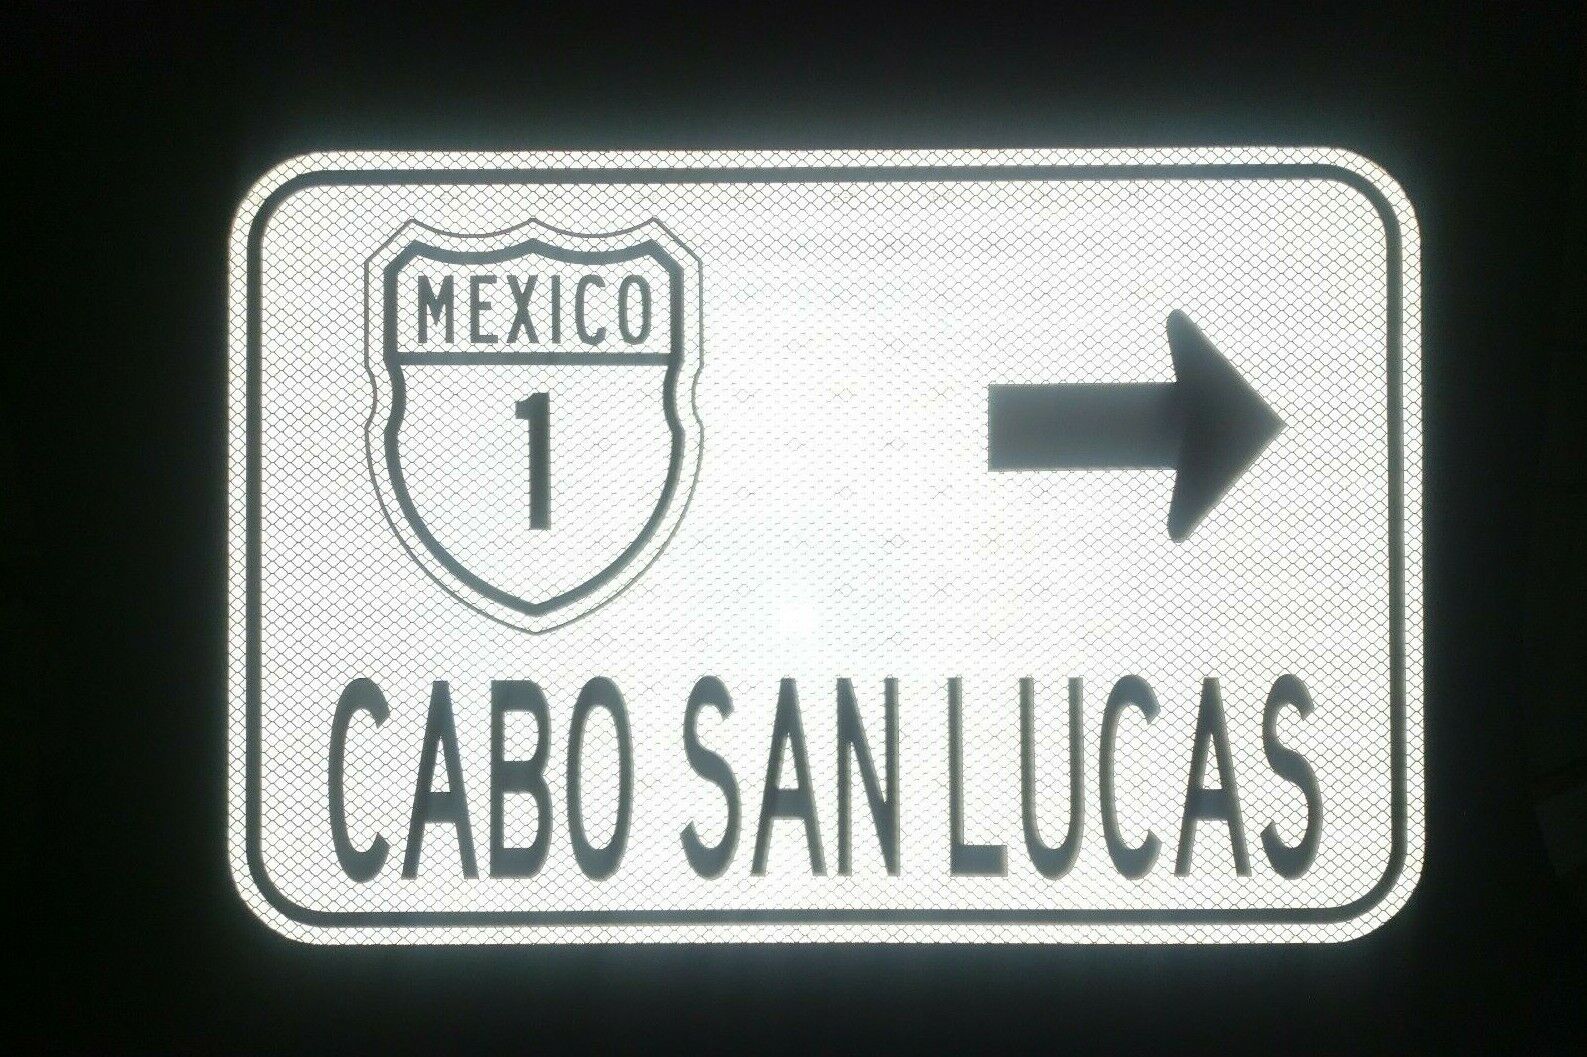 CABO SAN LUCAS route road sign Baja California, Mexico, San Diego, Tijuana